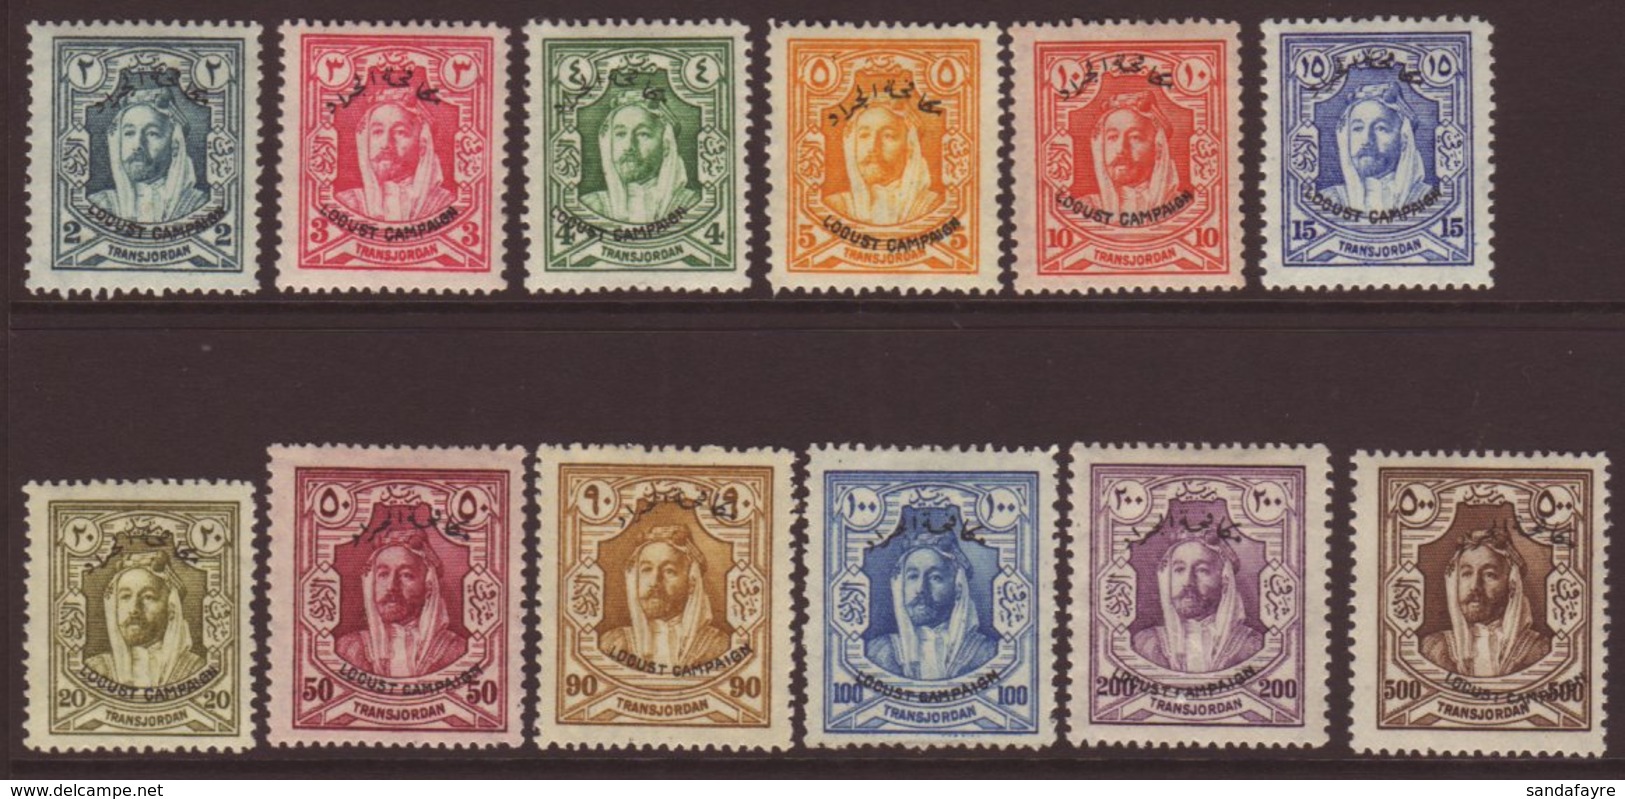 1930 Locust Campaign Overprints Complete Set, SG 183/94, Very Fine Mint, Fresh. (12 Stamps) For More Images, Please Visi - Jordanien